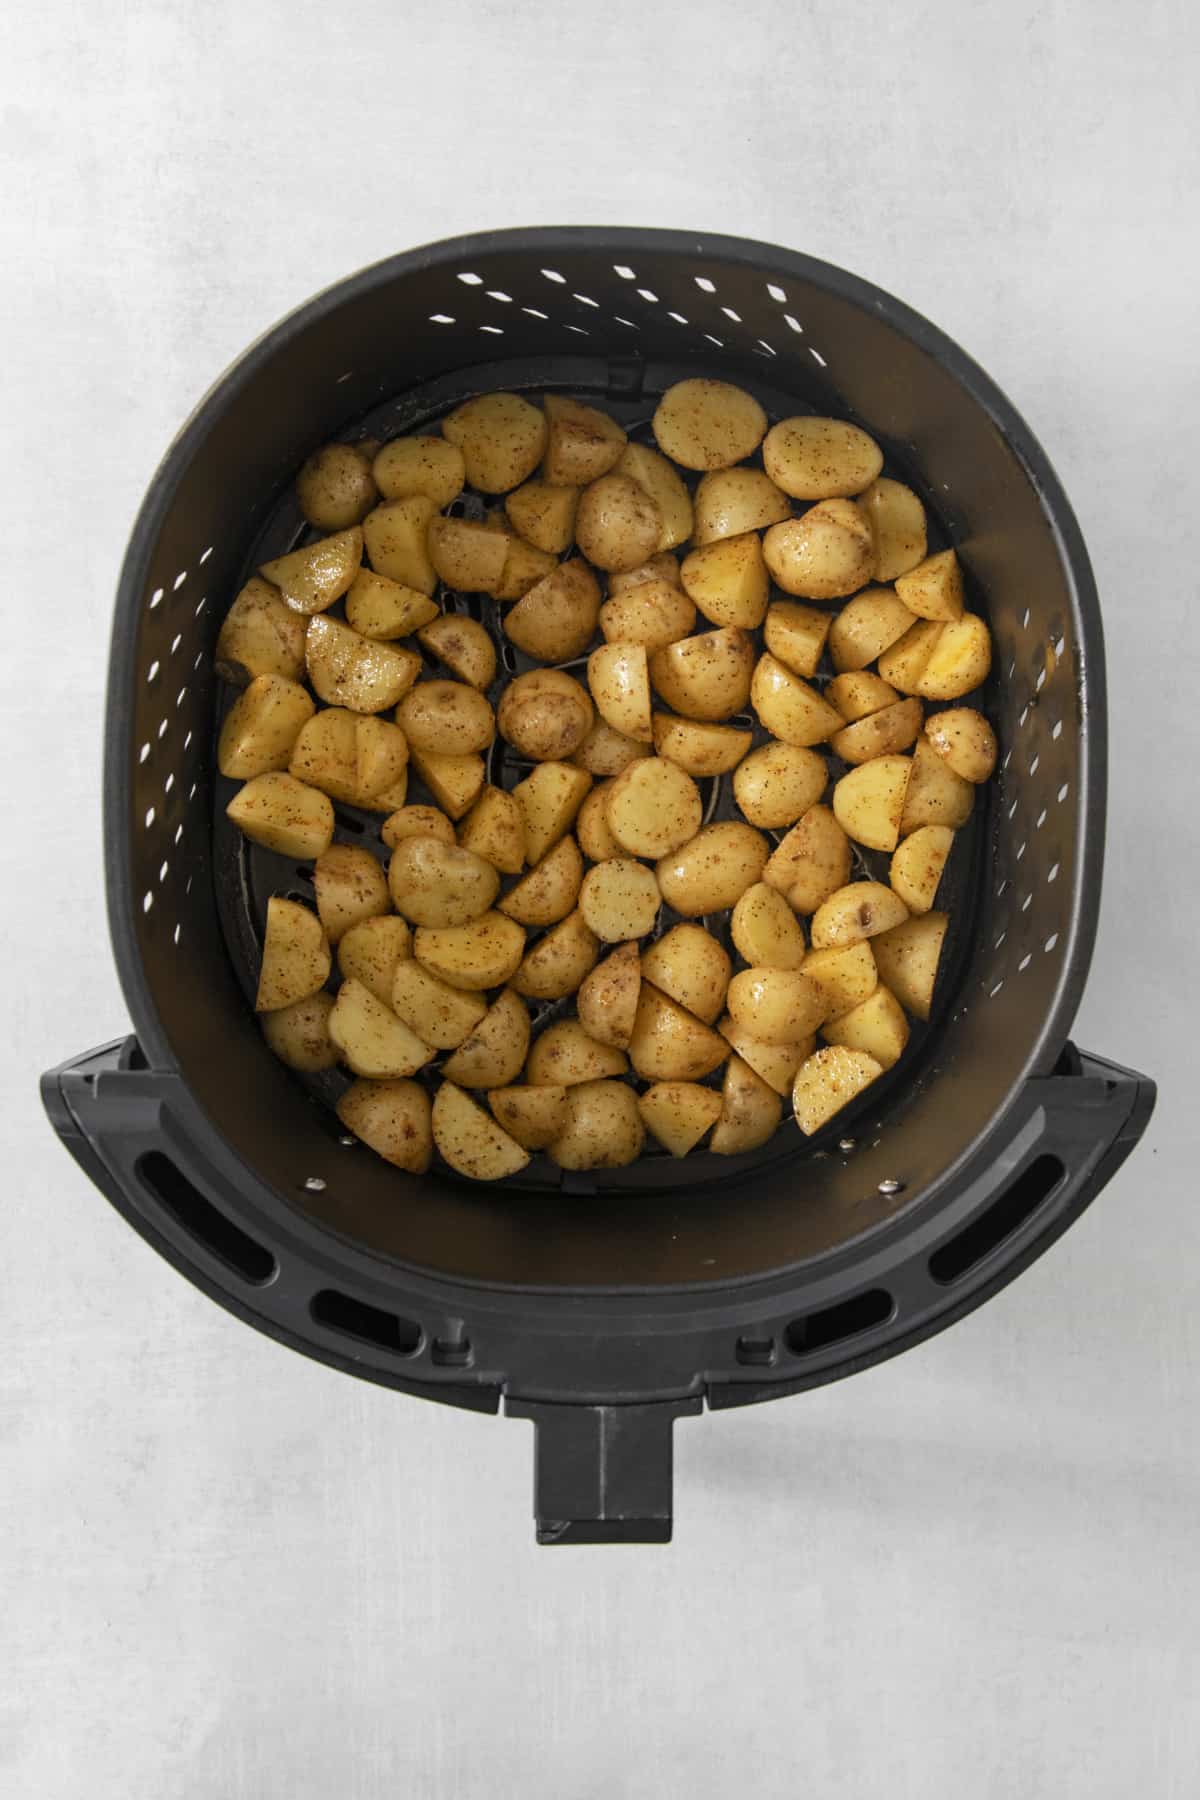 potato chunks in the air fryer.